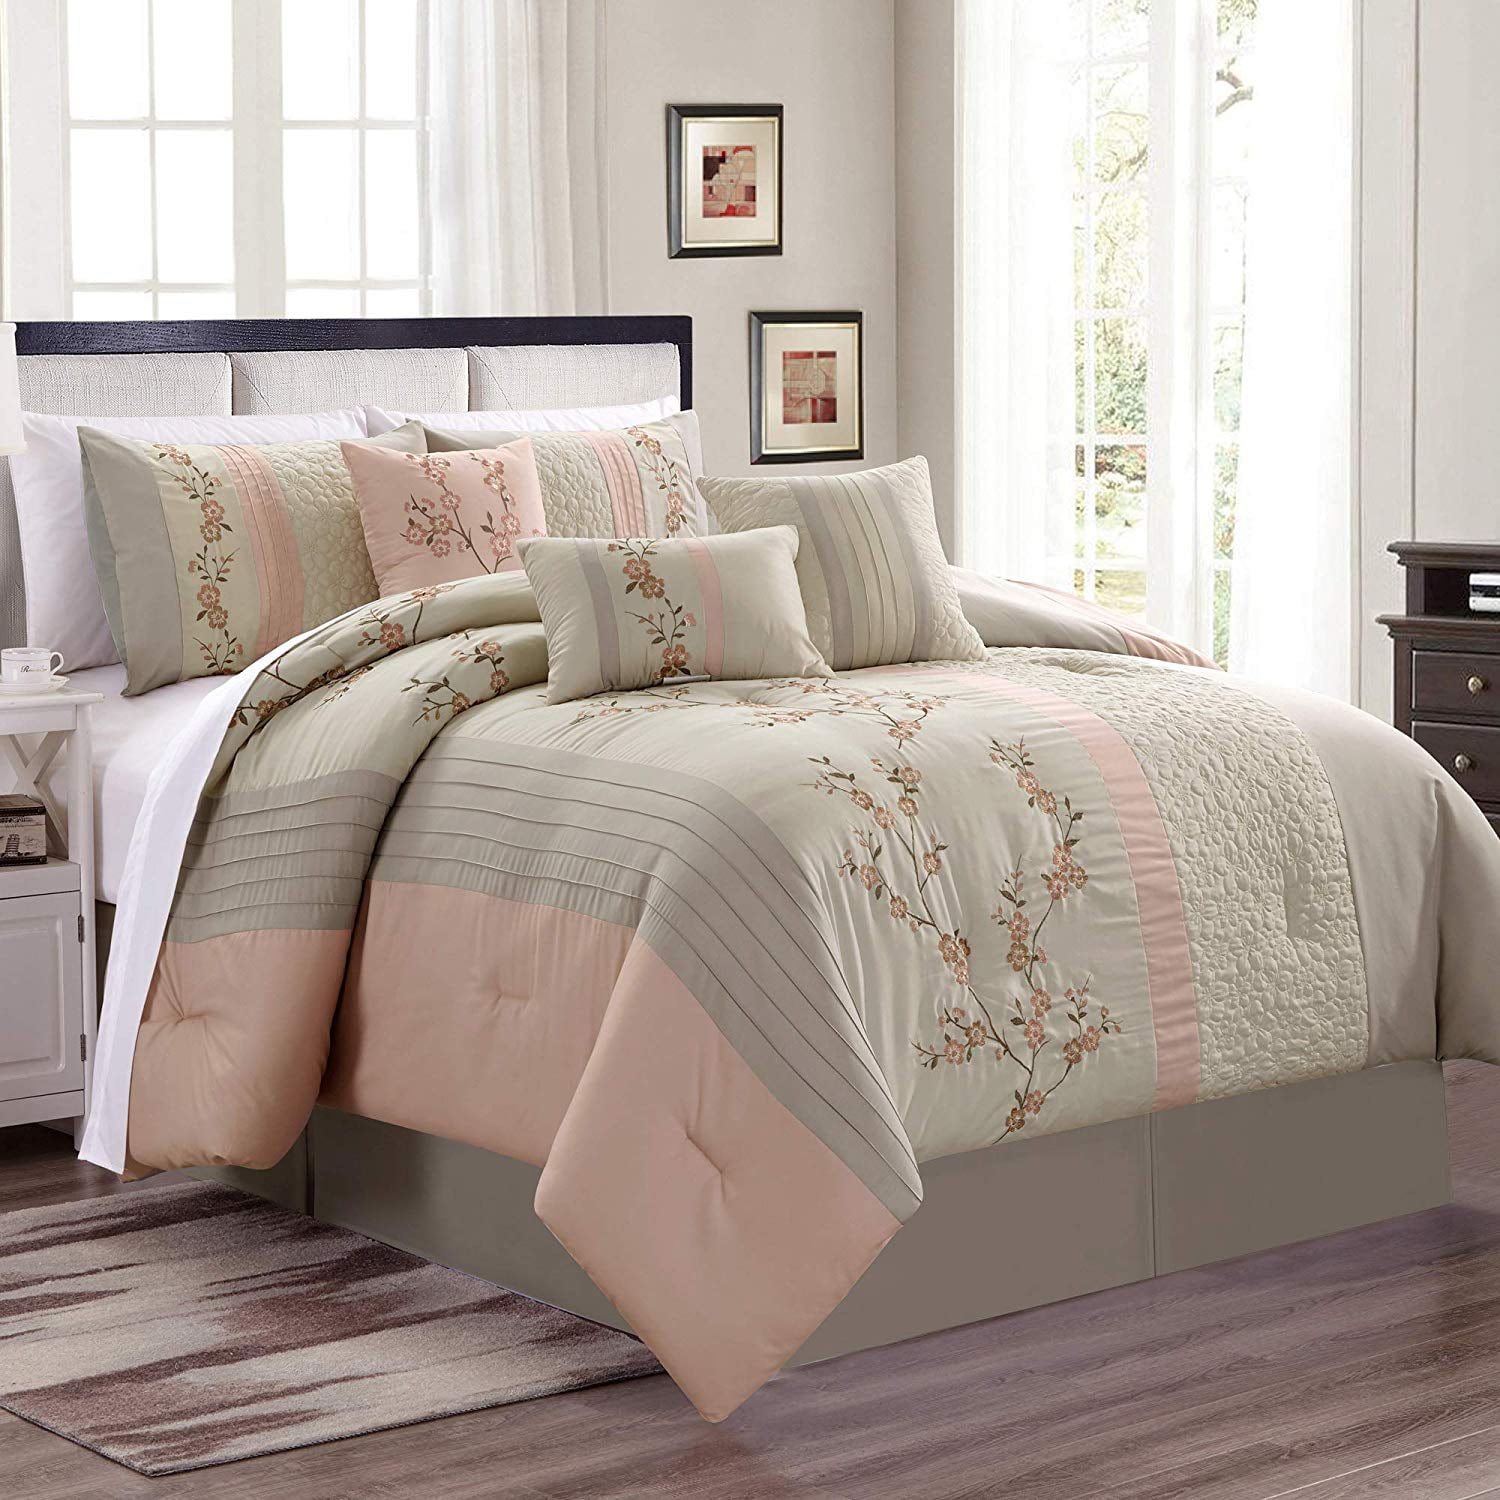 Luxurious 7 Piece Floral Sage/Yellow/Multi Bedding Comforter Set New. 